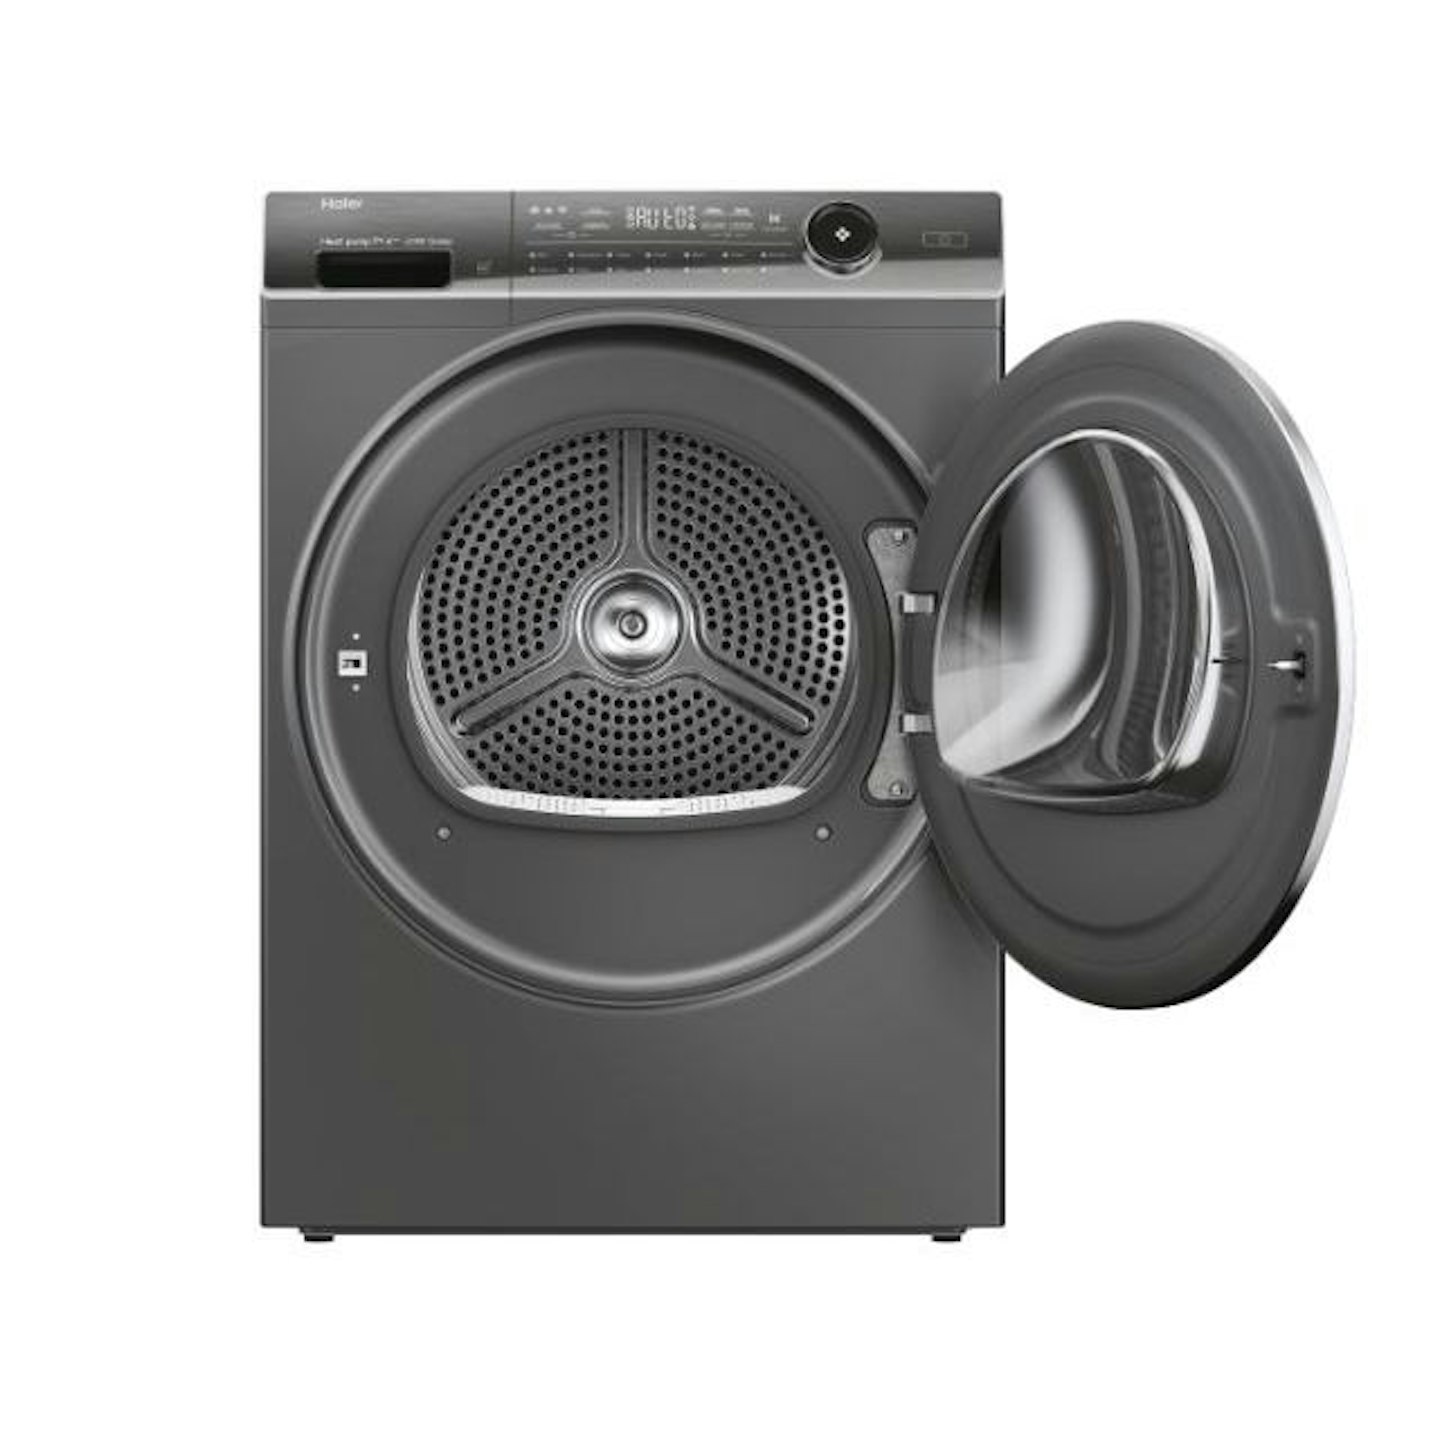 Tumble dryer Haier I-Pro Series 7 Plus